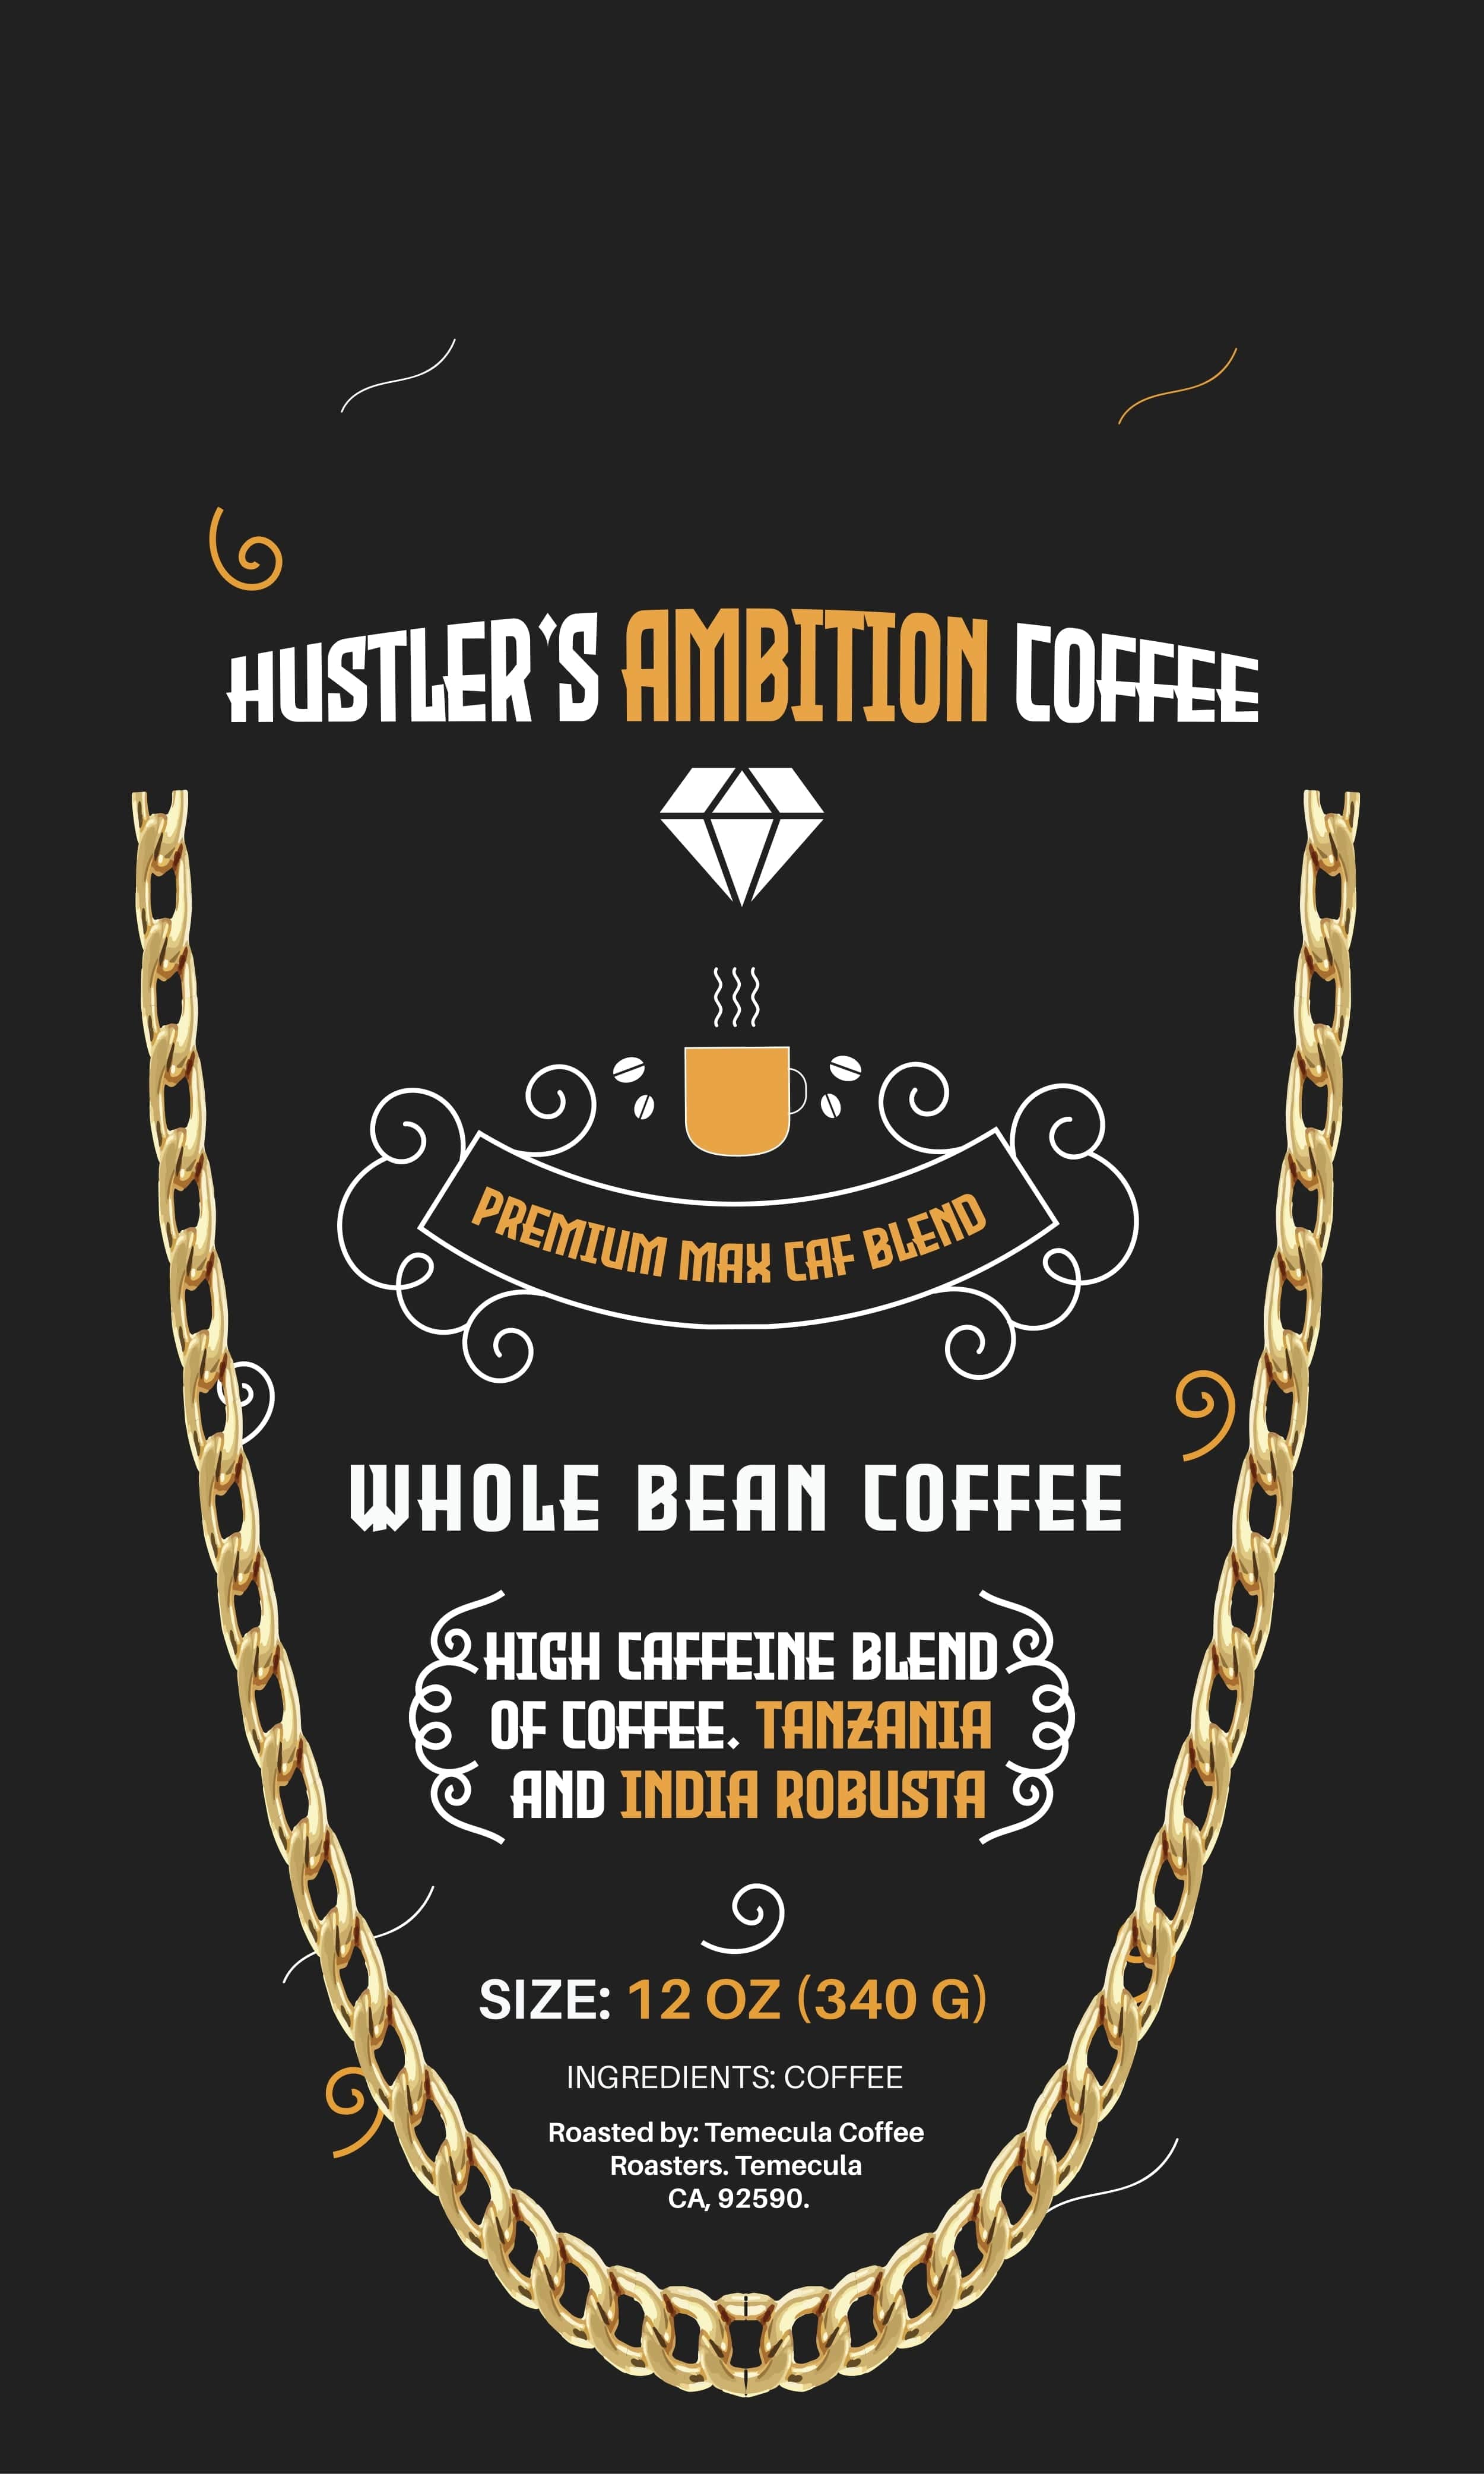 VVS Jewelry hip hop jewelry Whole / 12oz Hustler's Ambition Coffee